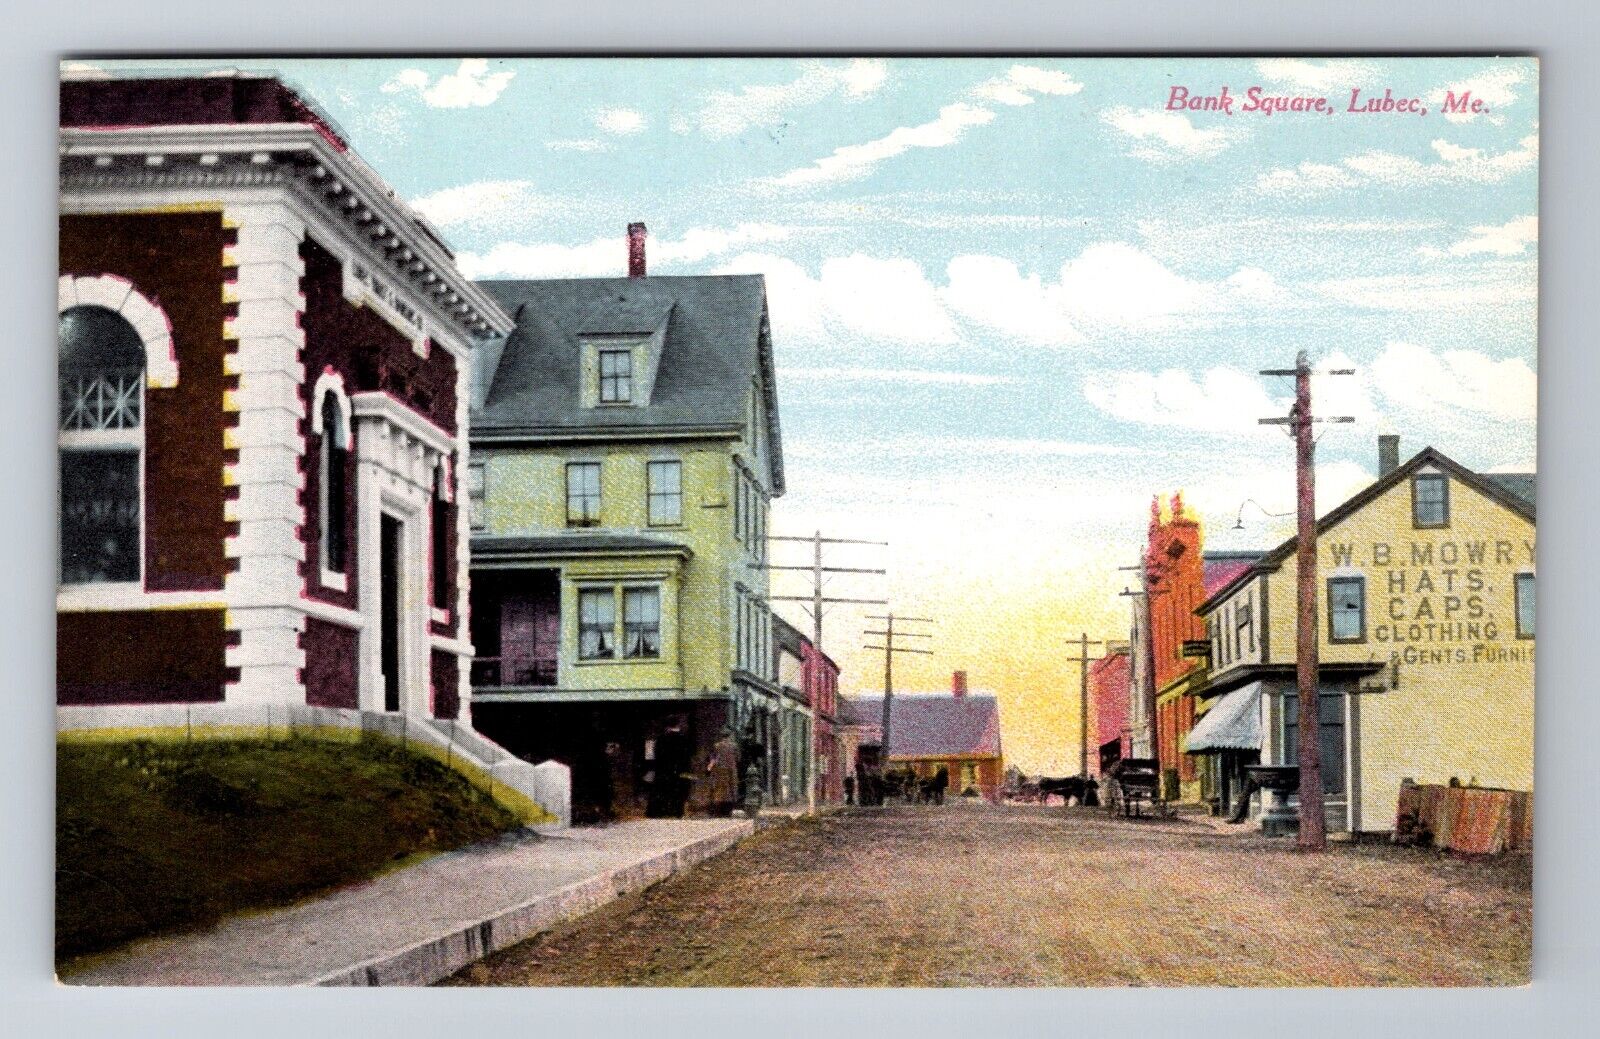 Lubec ME-Maine, Bank Square Street View, W.B. Mowry Clothing, Vintage Postcard